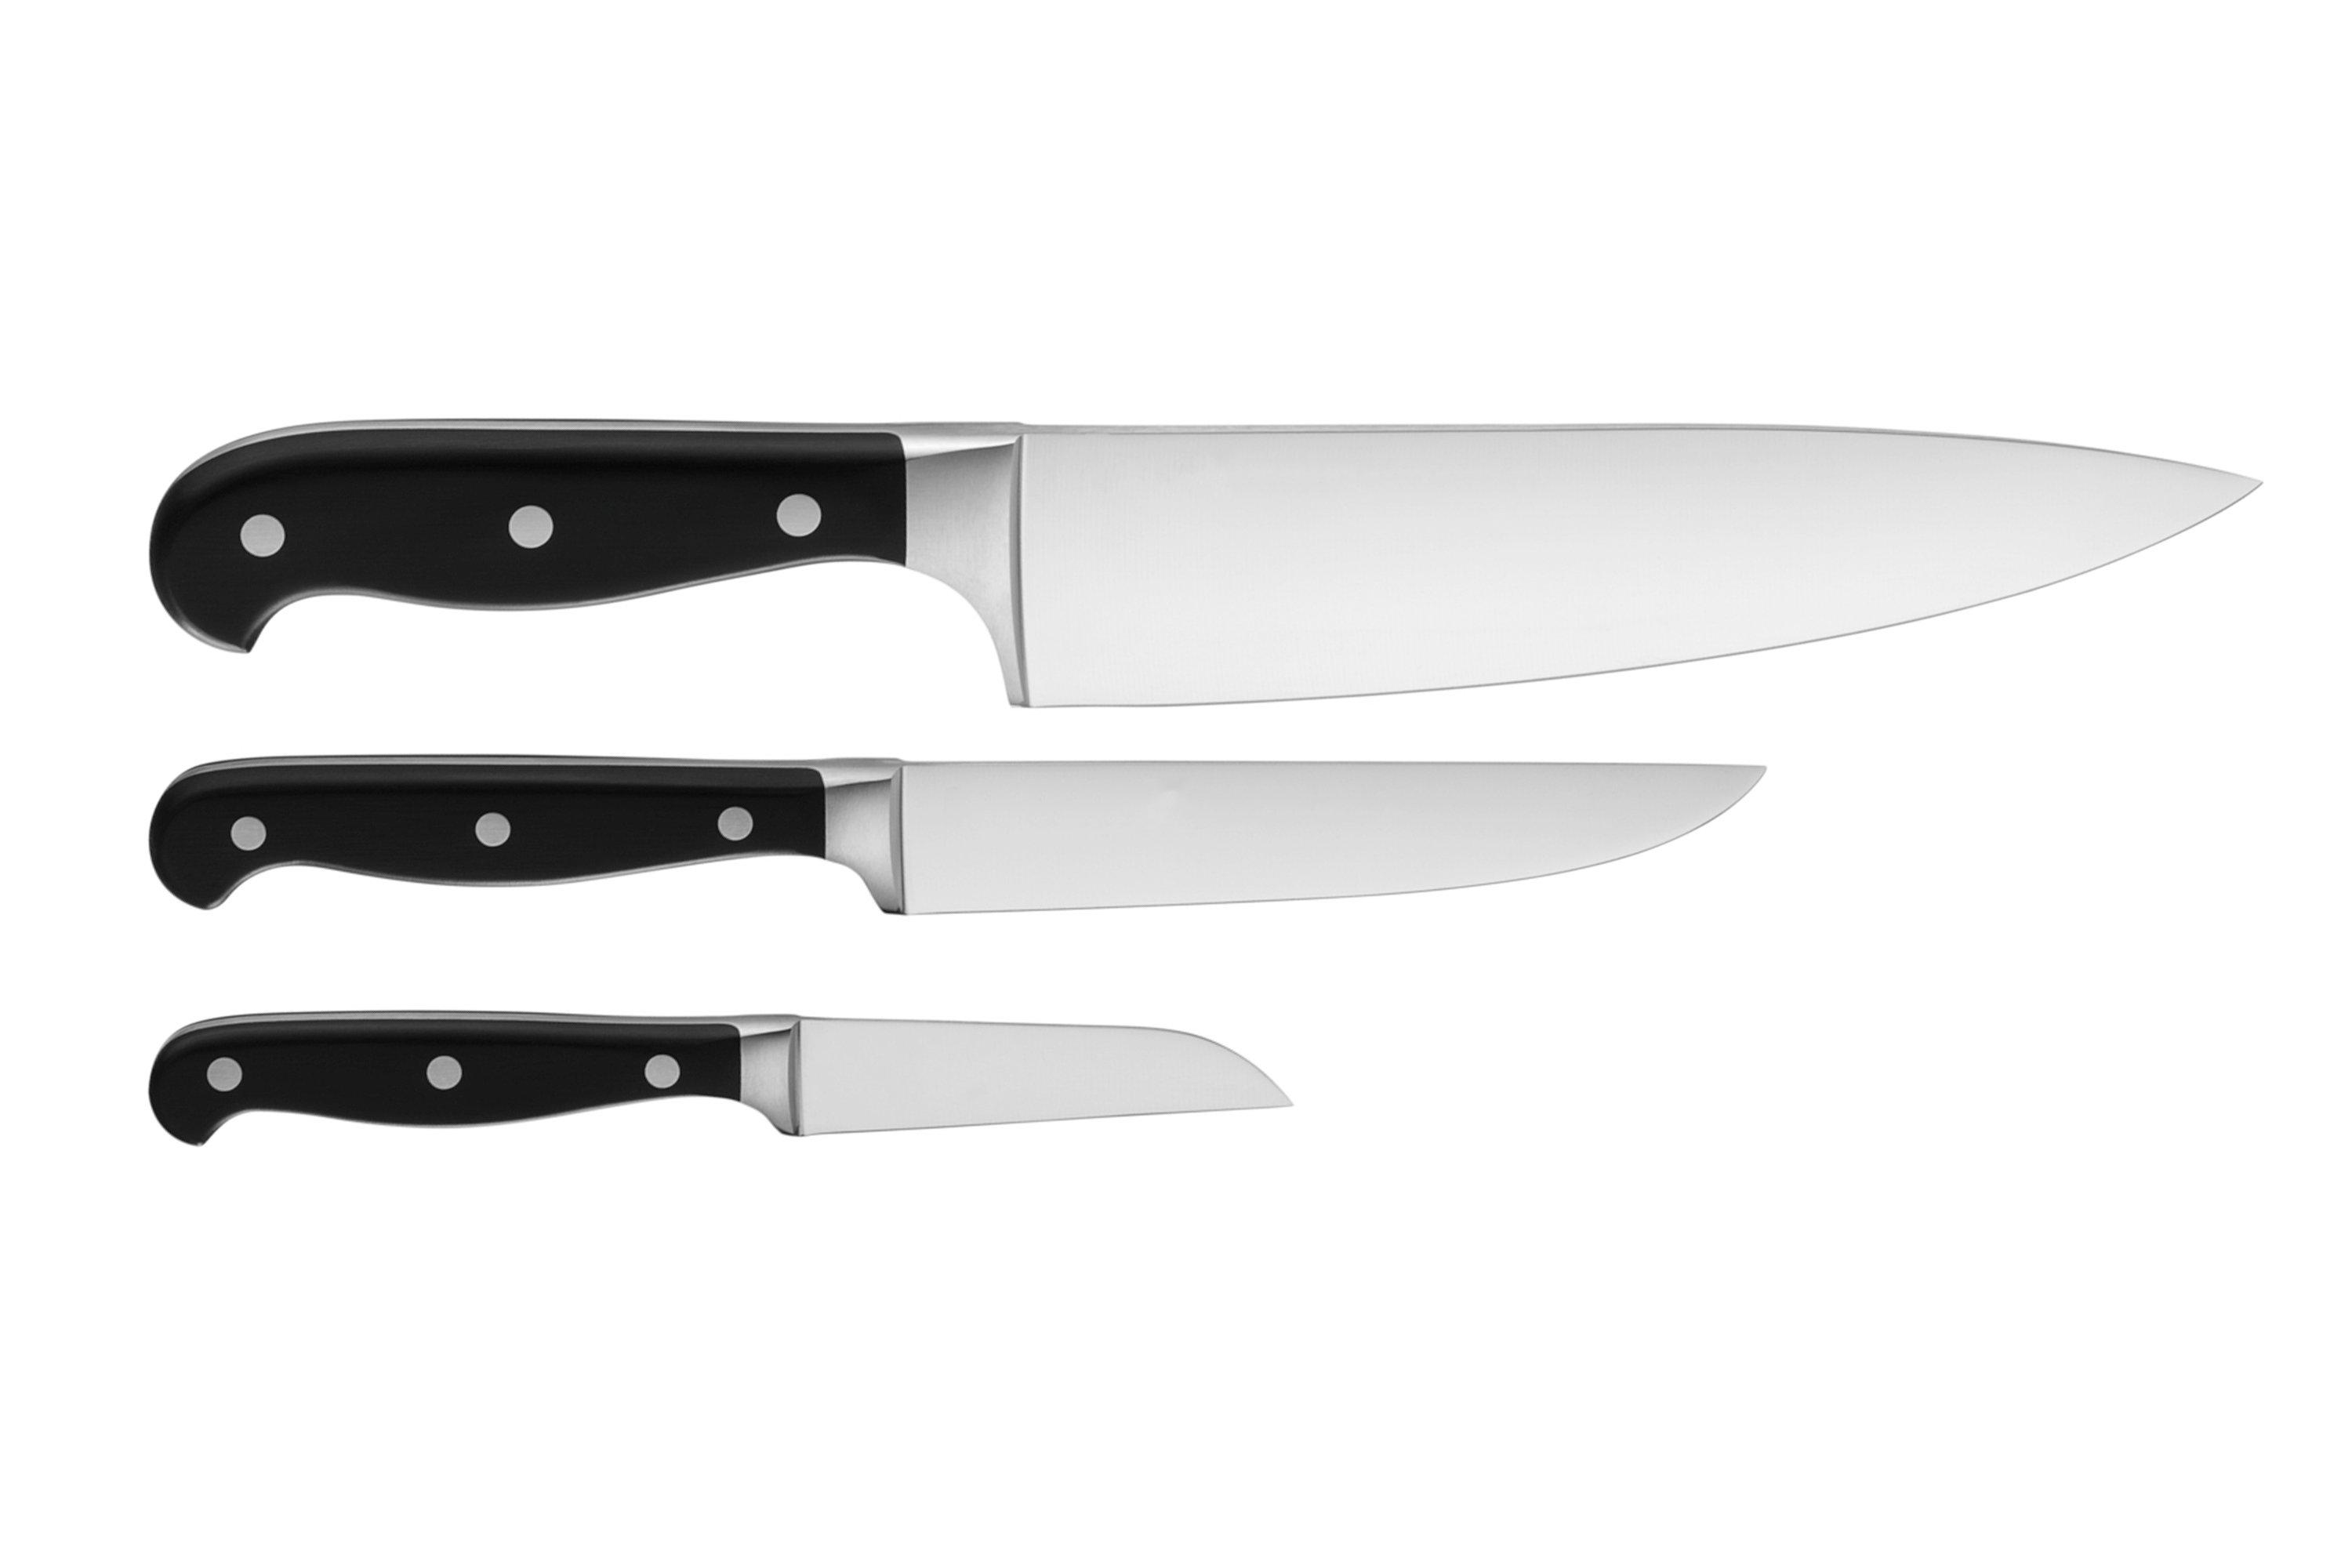 1894919992, Spitzenklasse at set Advantageously WMF Plus shopping knife | 3-piece